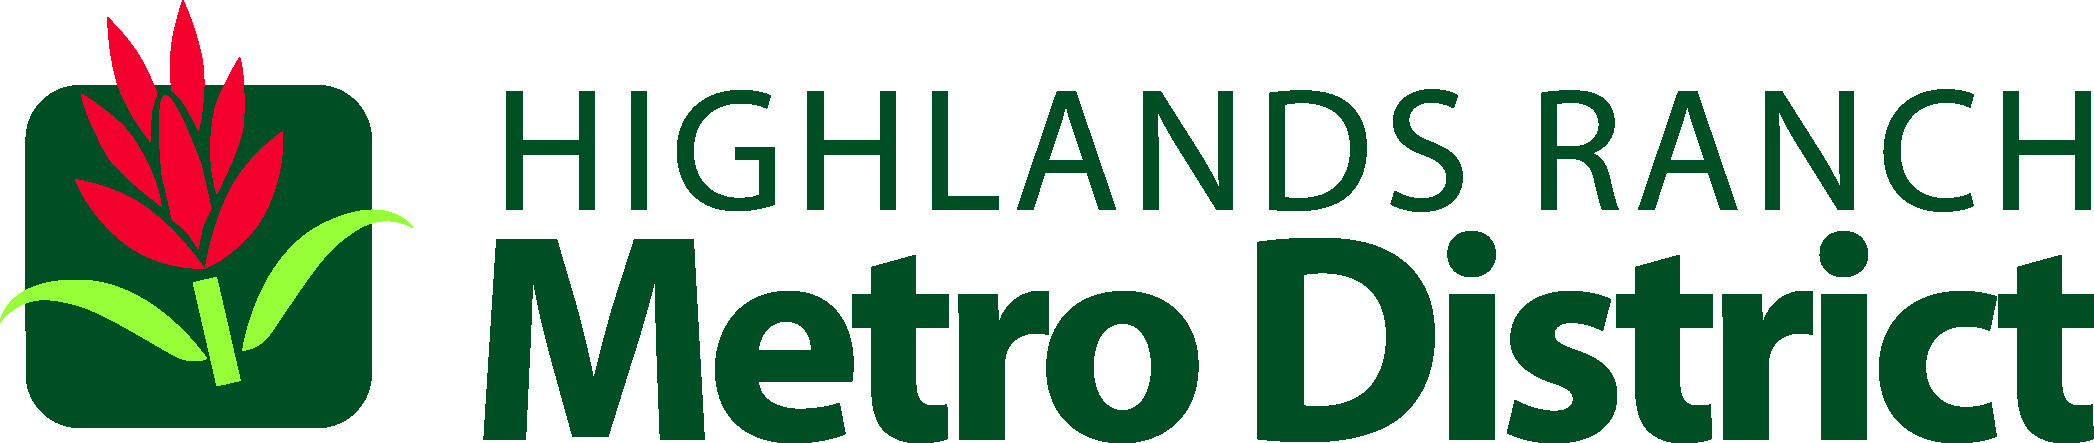 Highlands Ranch Metro District logo